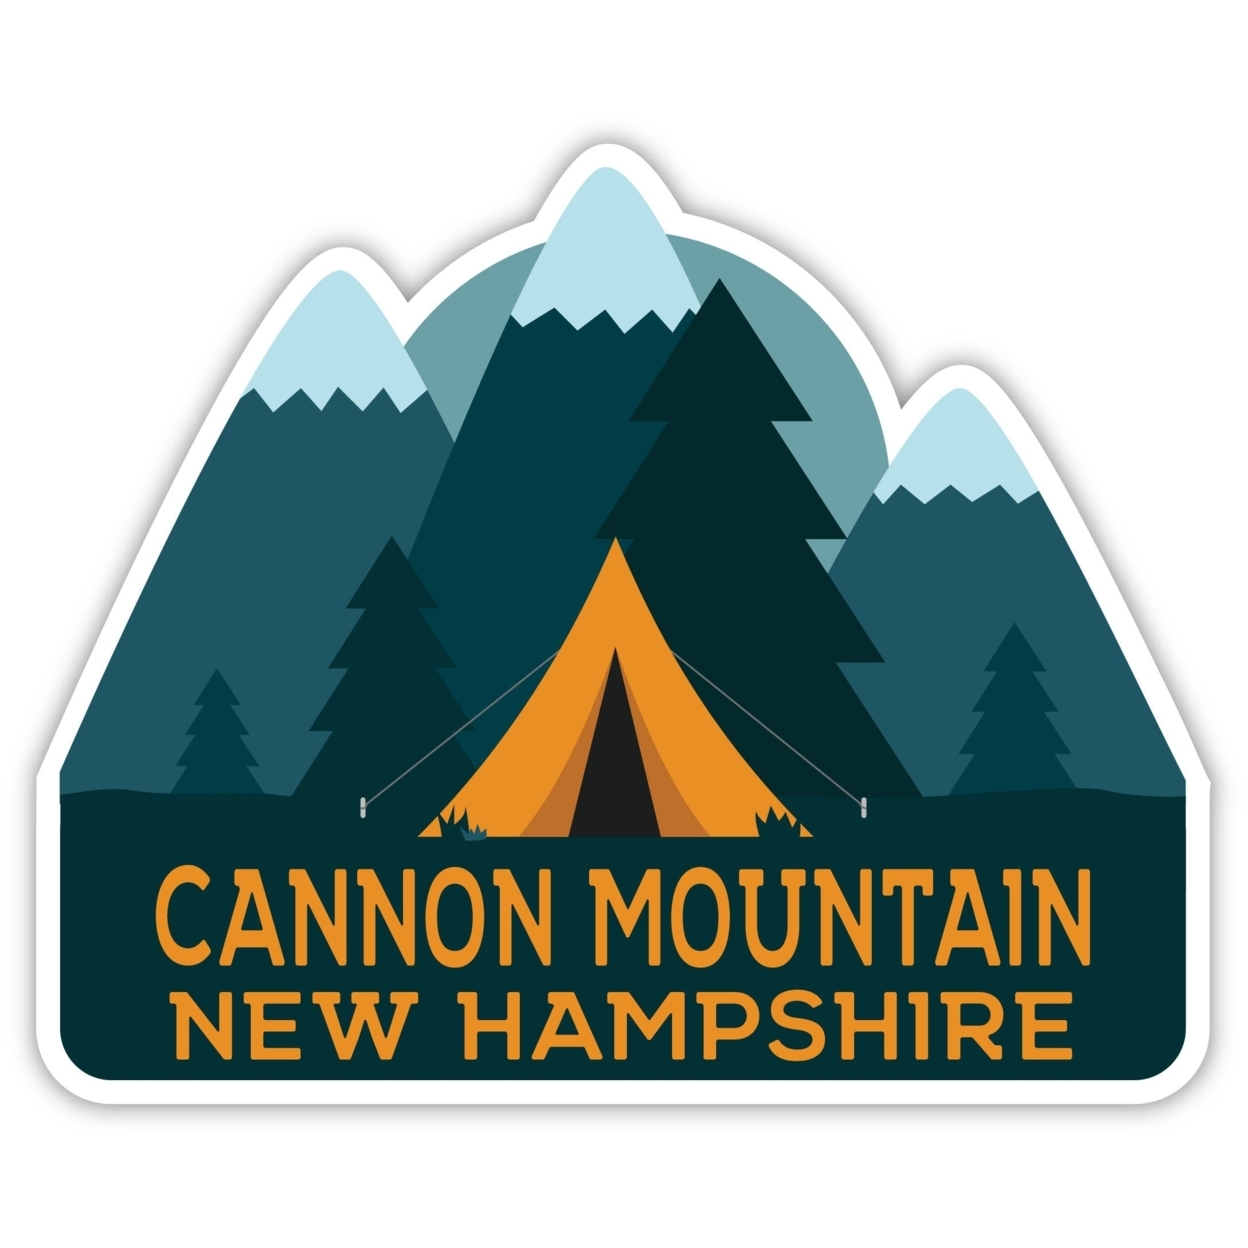 Cannon Mountain New Hampshire Souvenir Decorative Stickers (Choose Theme And Size) - Single Unit, 8-Inch, Tent